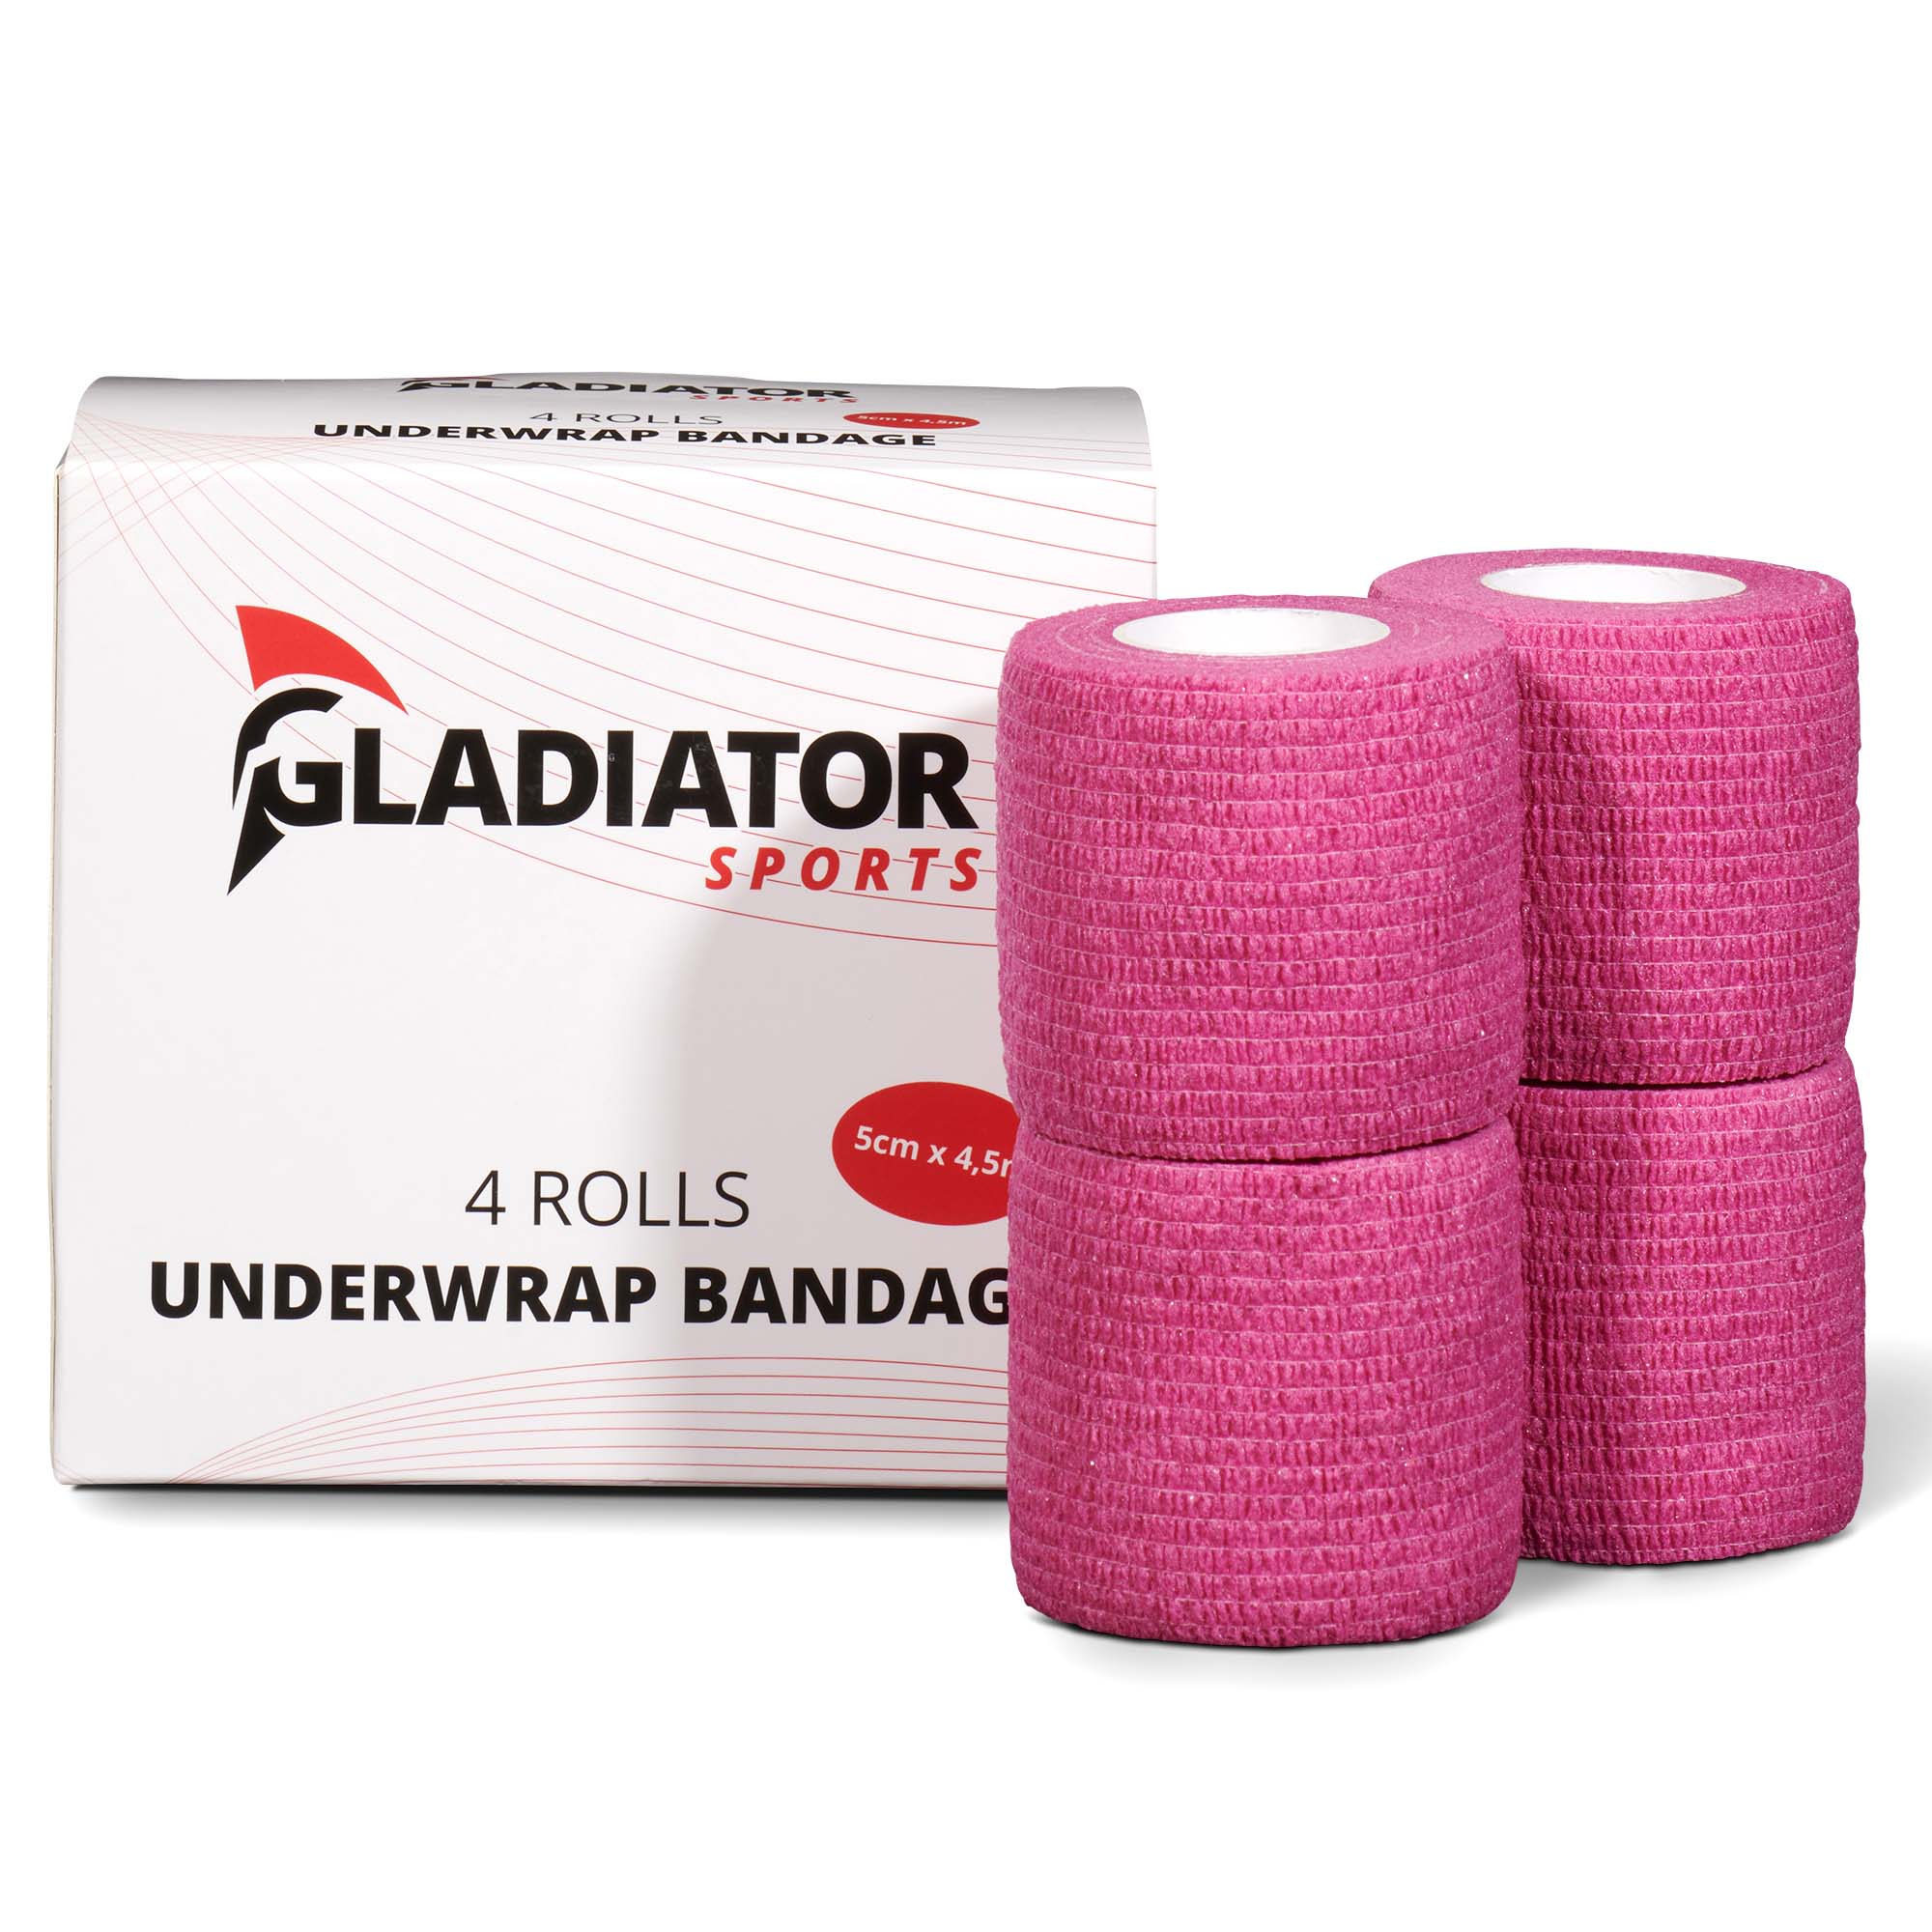 Gladiator Sports underwrap bandage 4 rolls with box pink